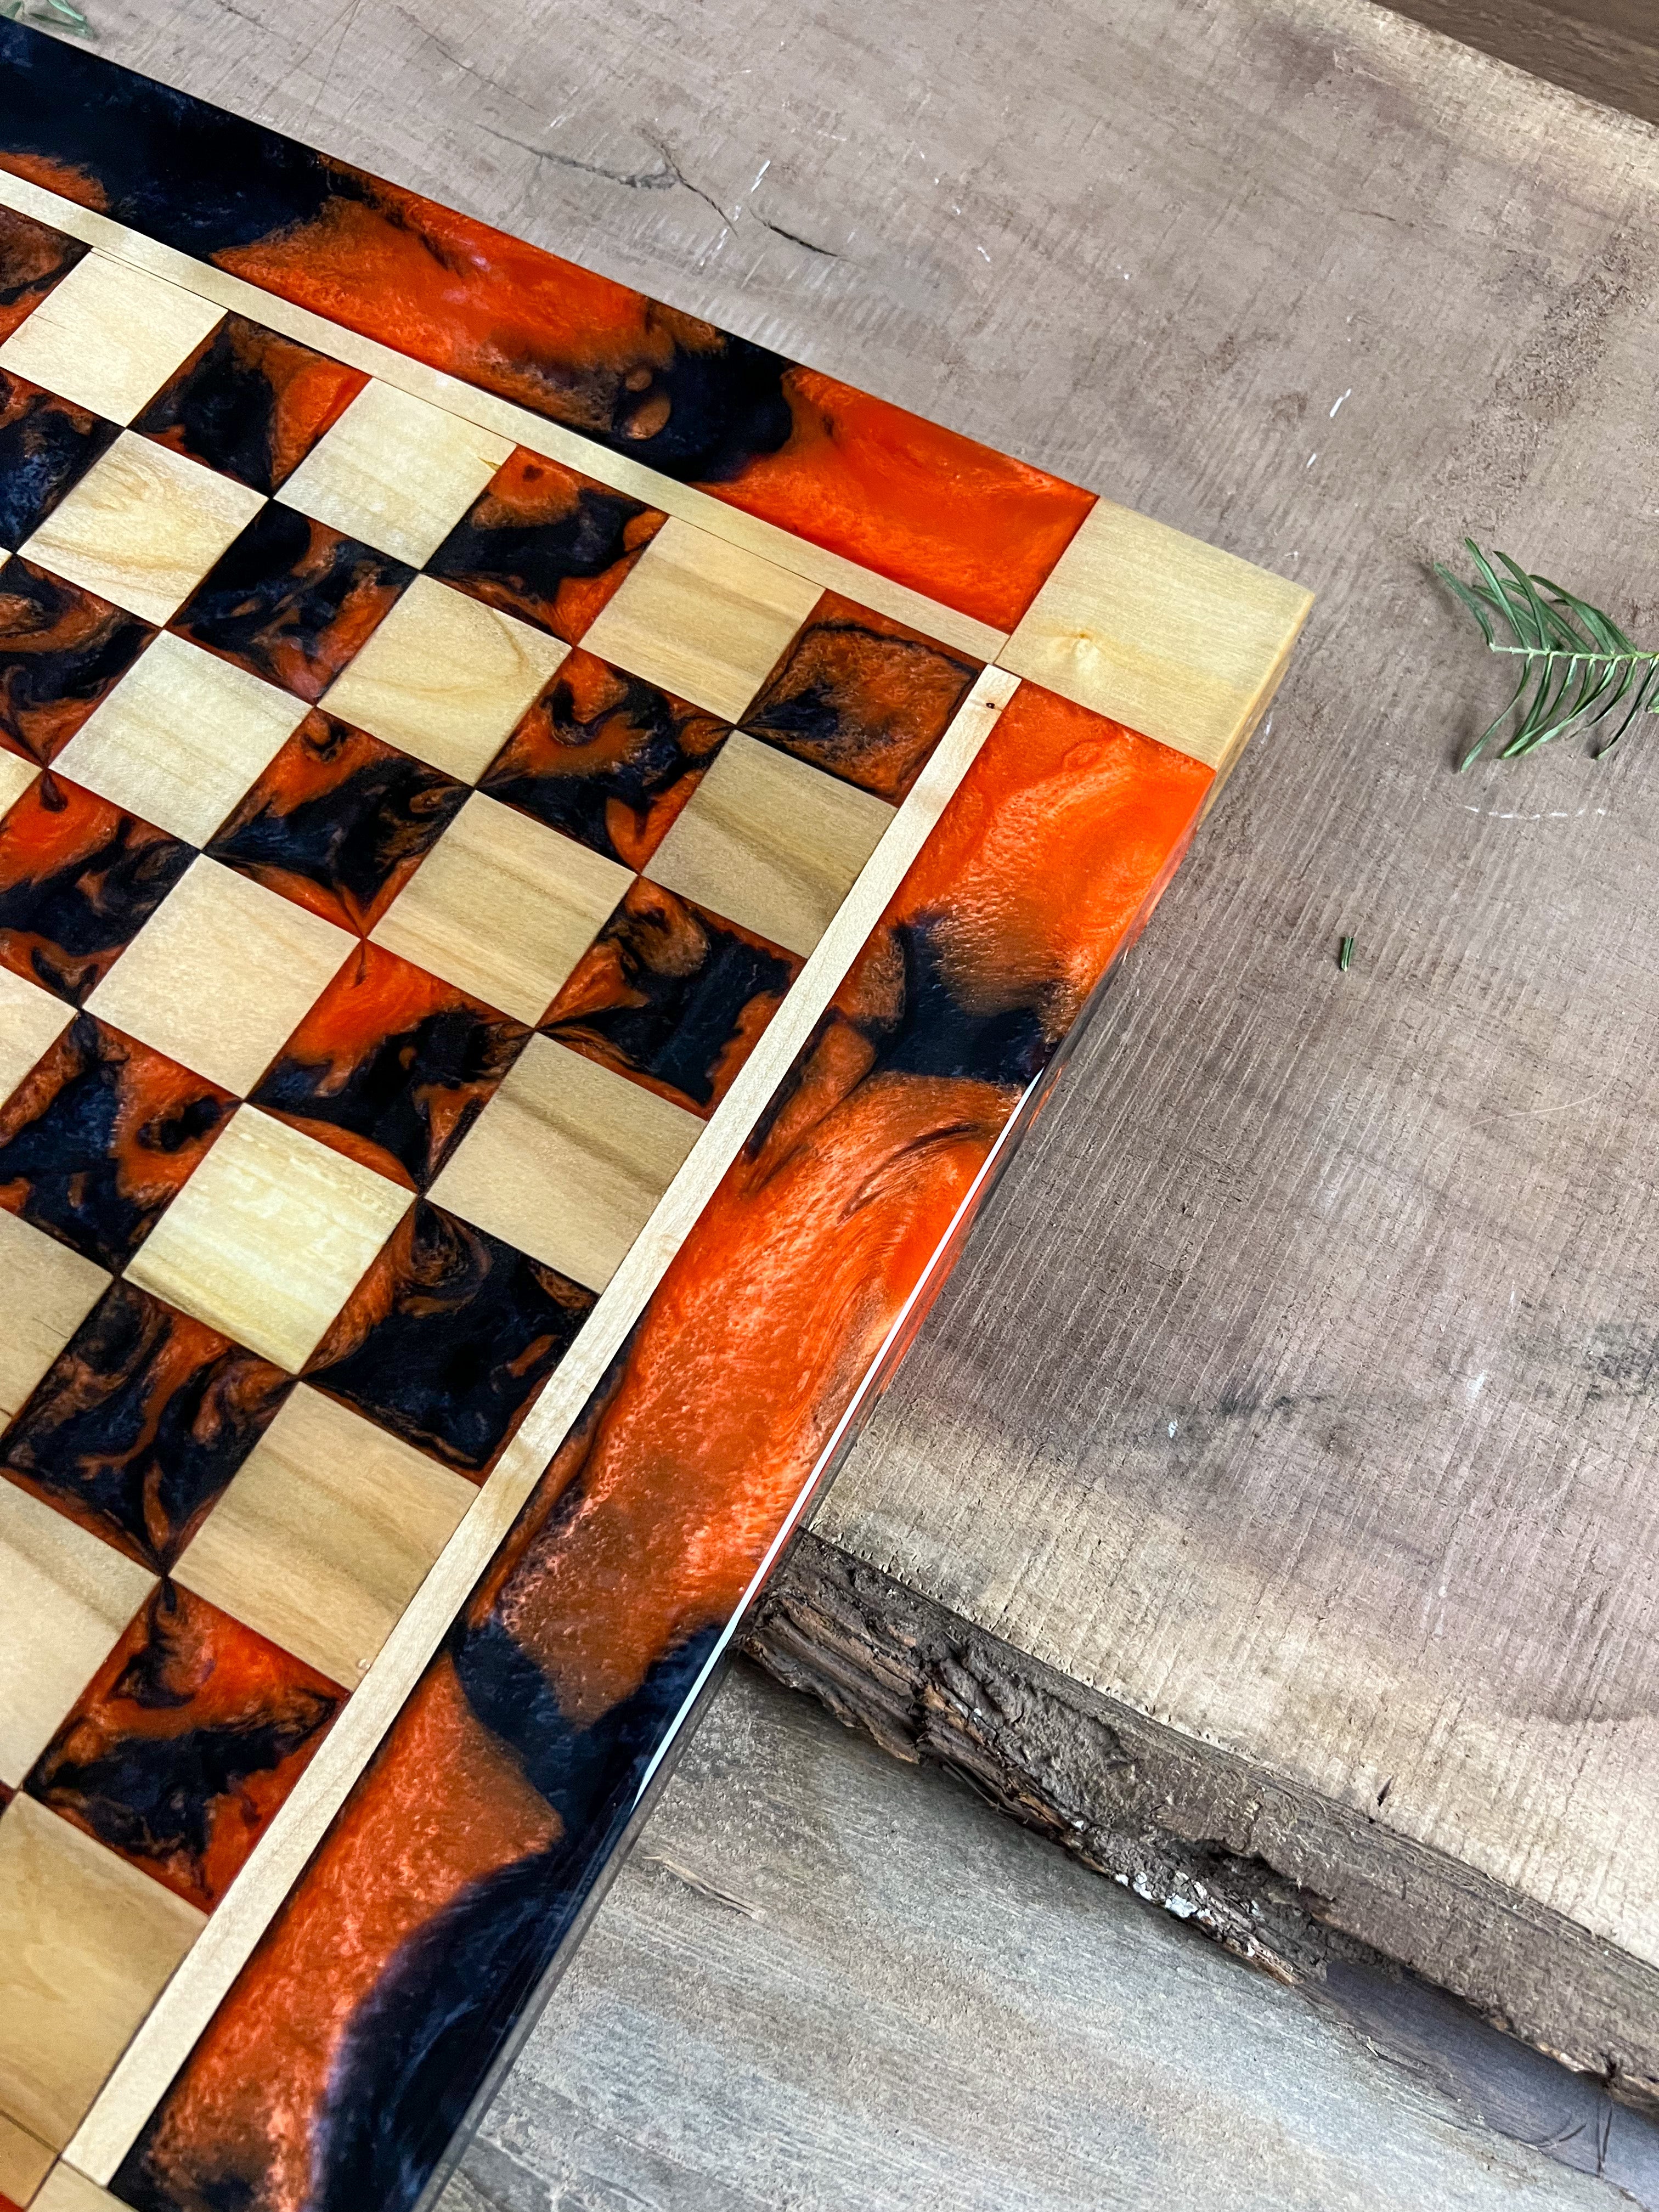 Black Onyx Orange Maple Wood Chess Board (With Border)